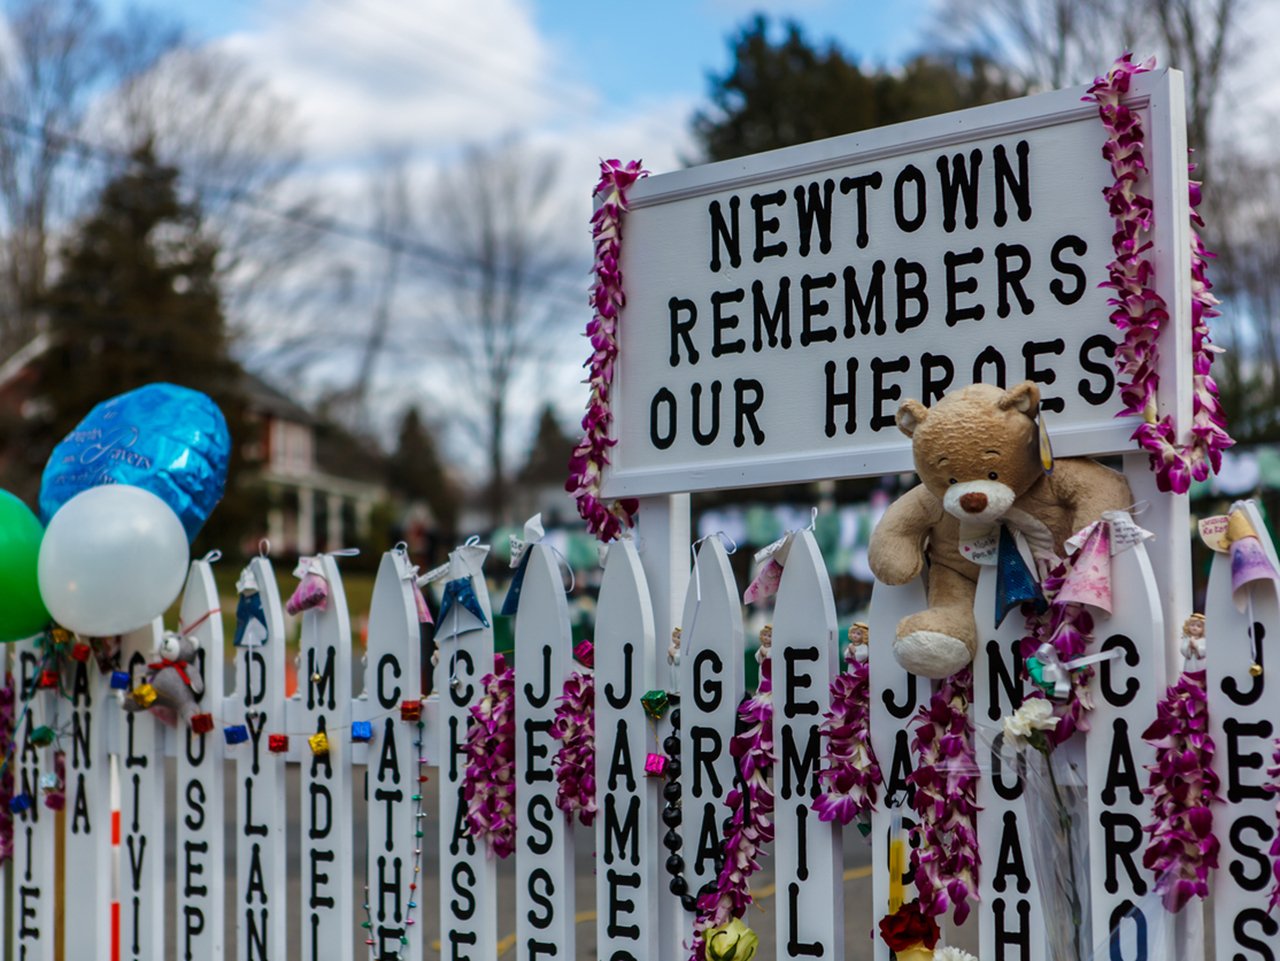 Sandy Hook Elementary School shooting memorial in Newtown, Connecticut